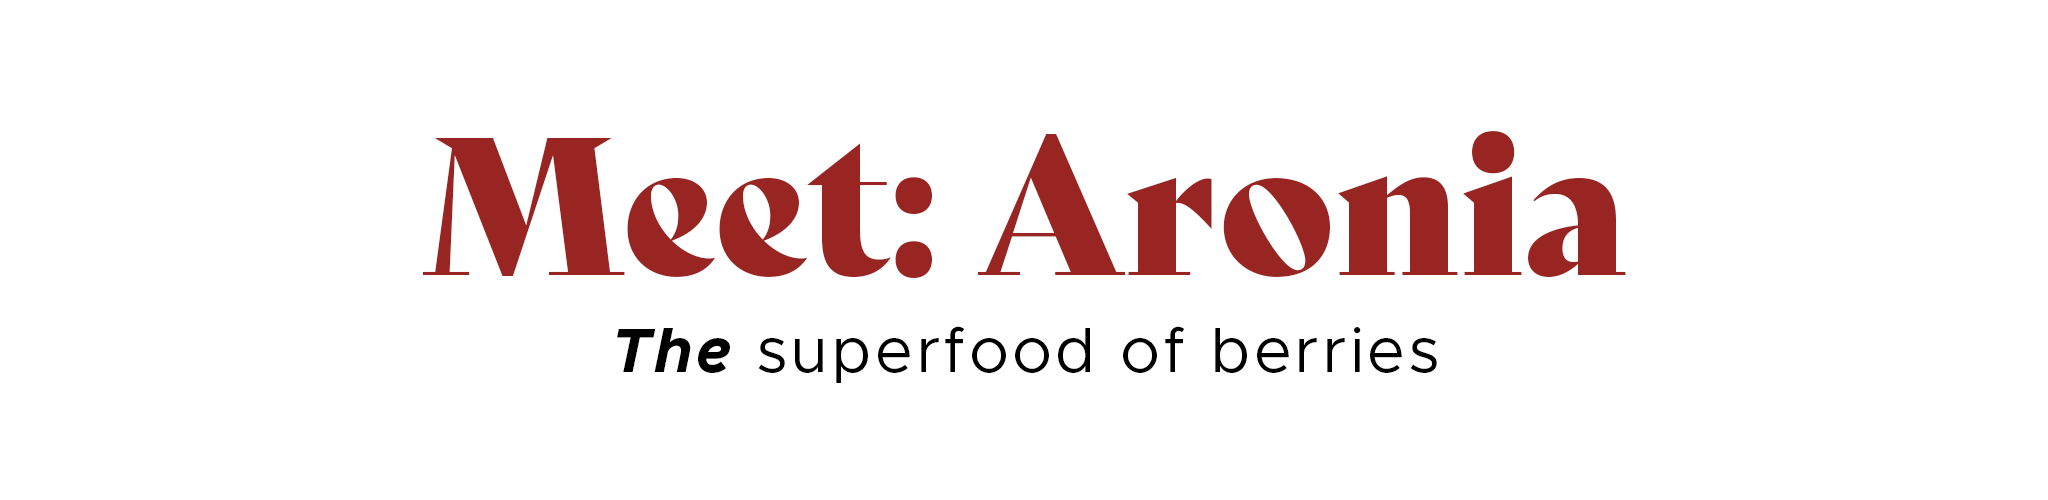 Meet Aronia: The Superfood of Berries